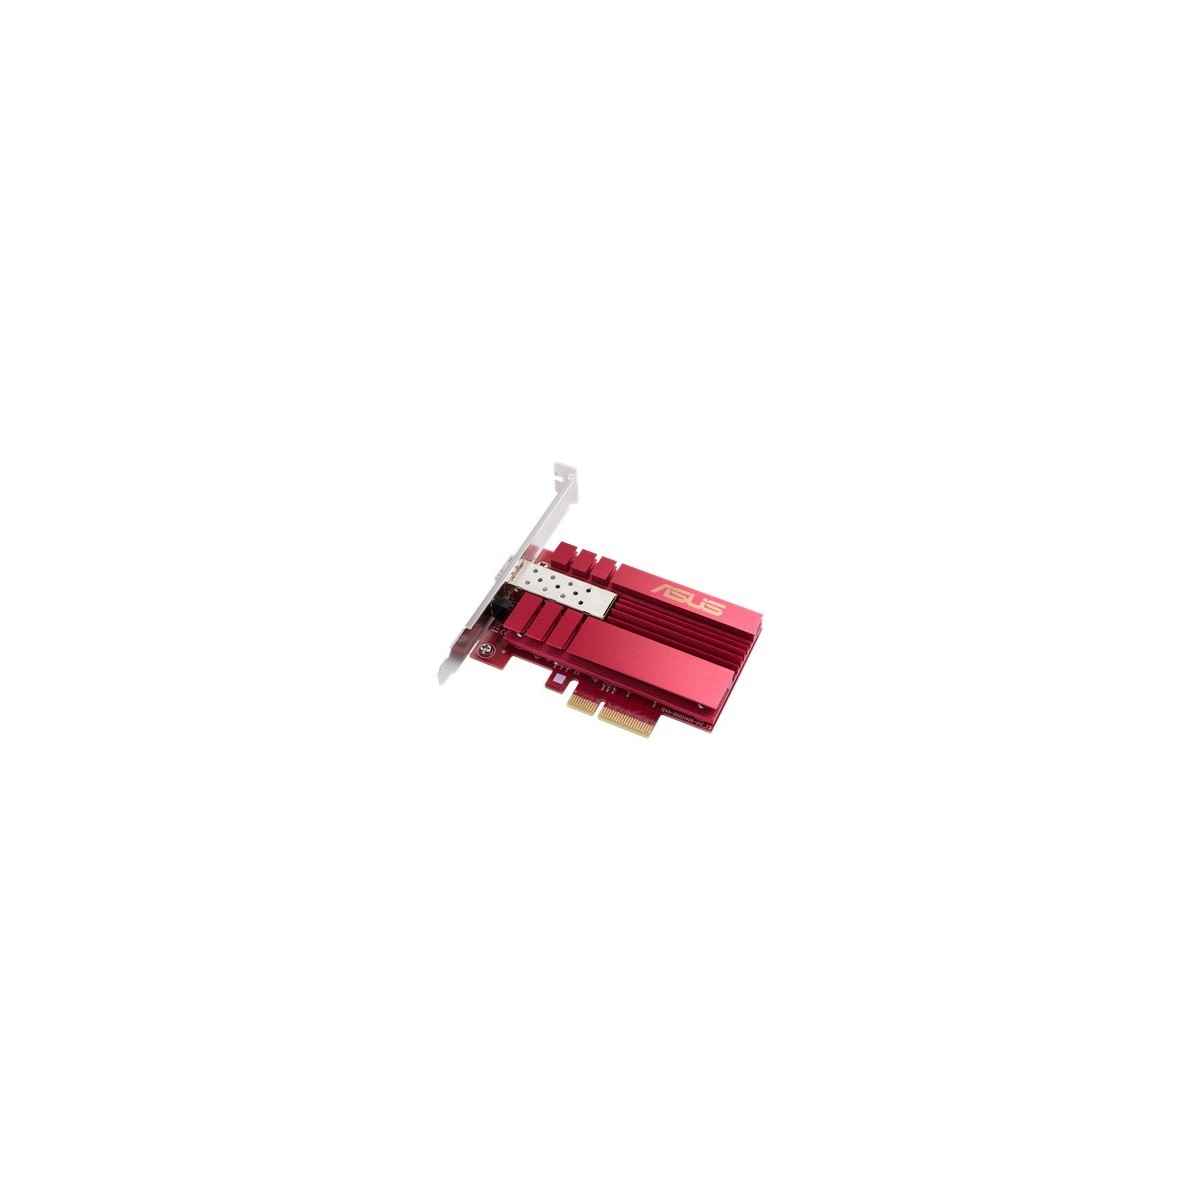 ASUS XG-C100F - Internal - Wired - PCI Express - Fiber - 10000 Mbit/s - Red